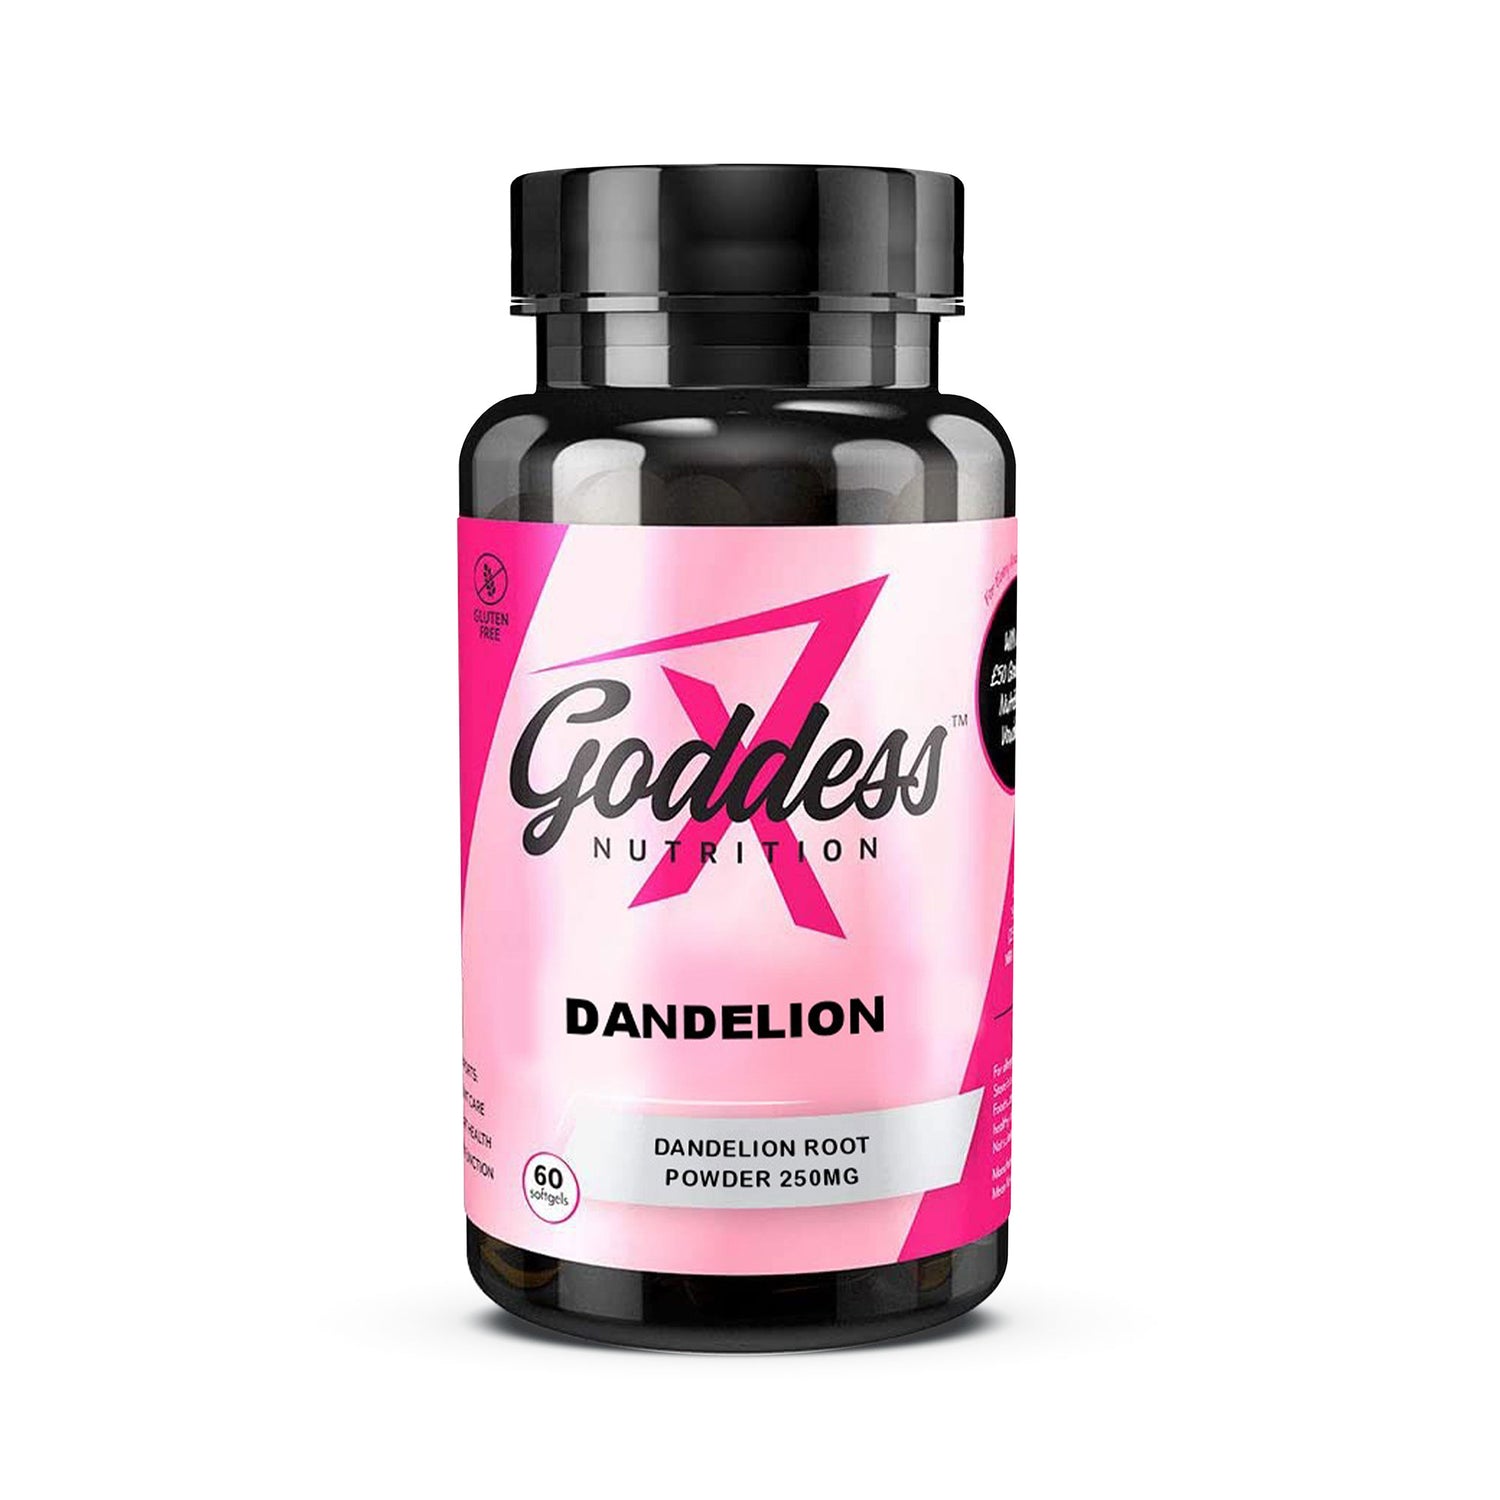 Goddess Nutrition Dandelion Root Powder